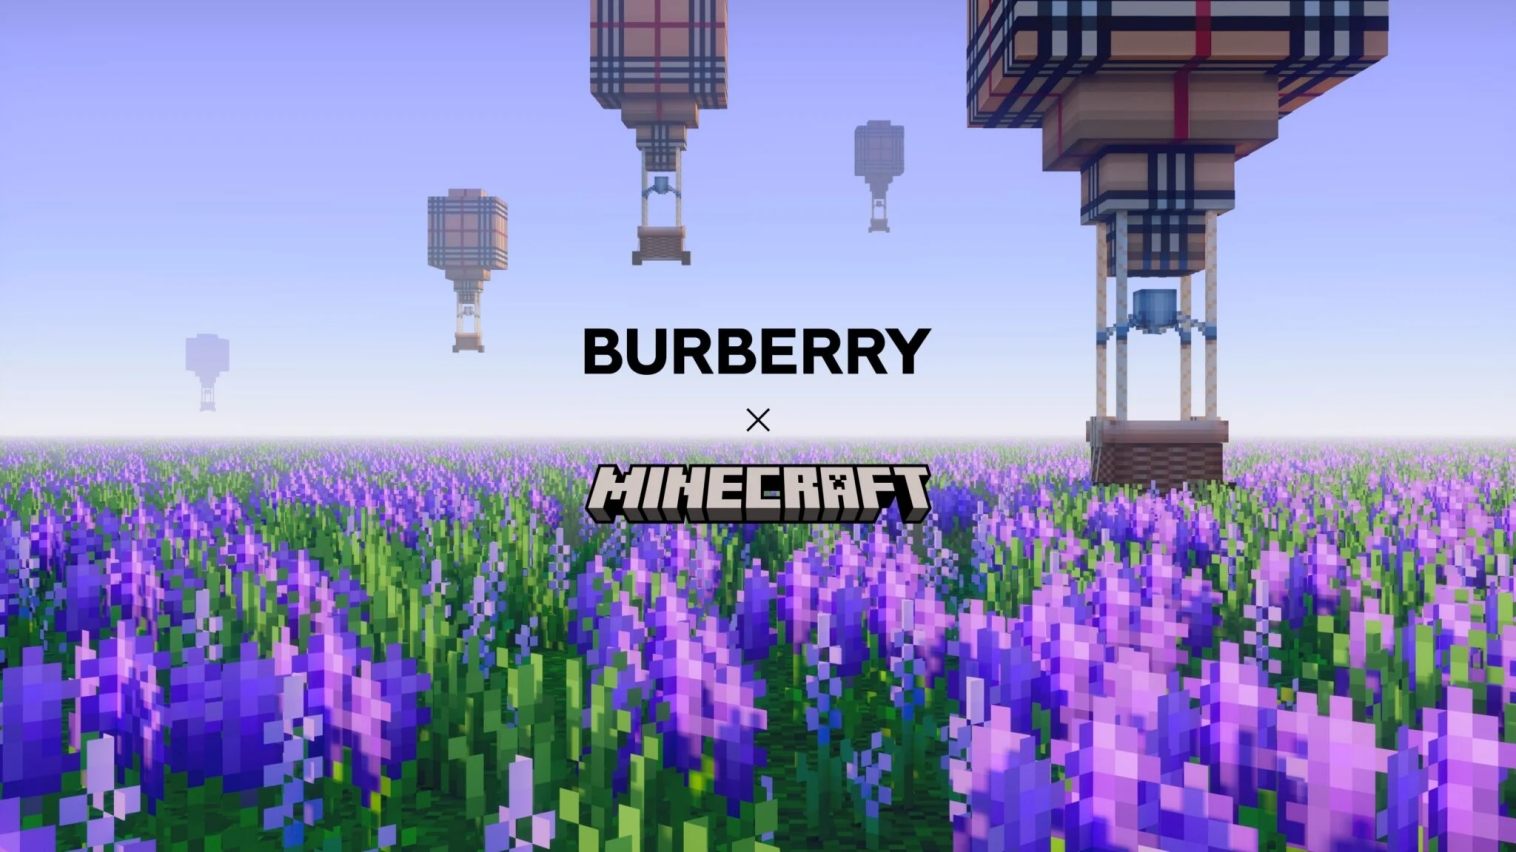 Burberry x Minecraft Collaboration.